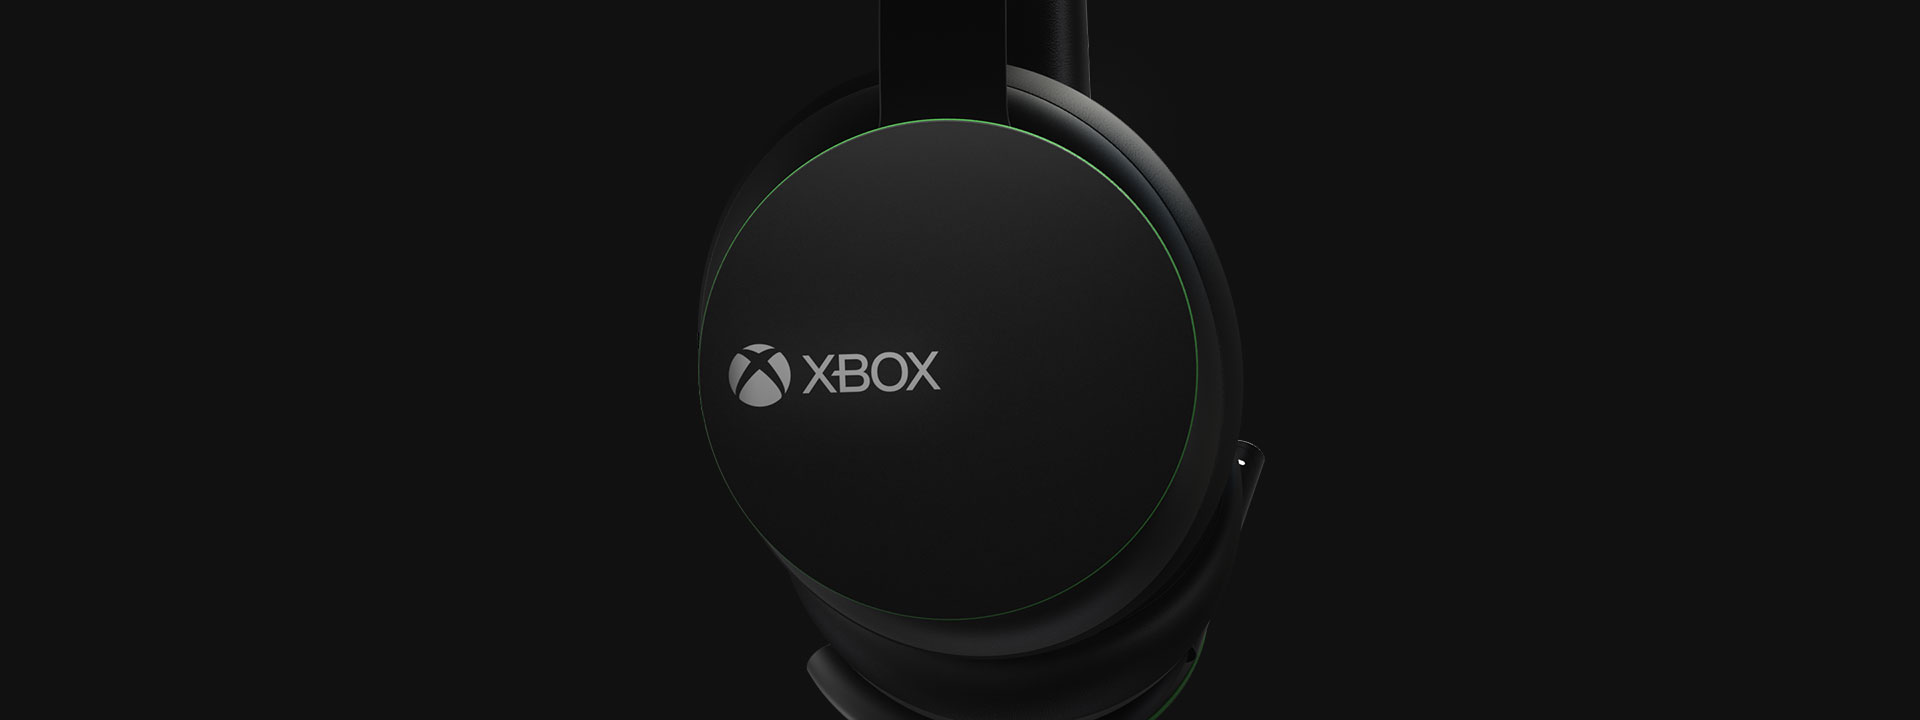 Auriculares inalámbricos Microsoft Xbox